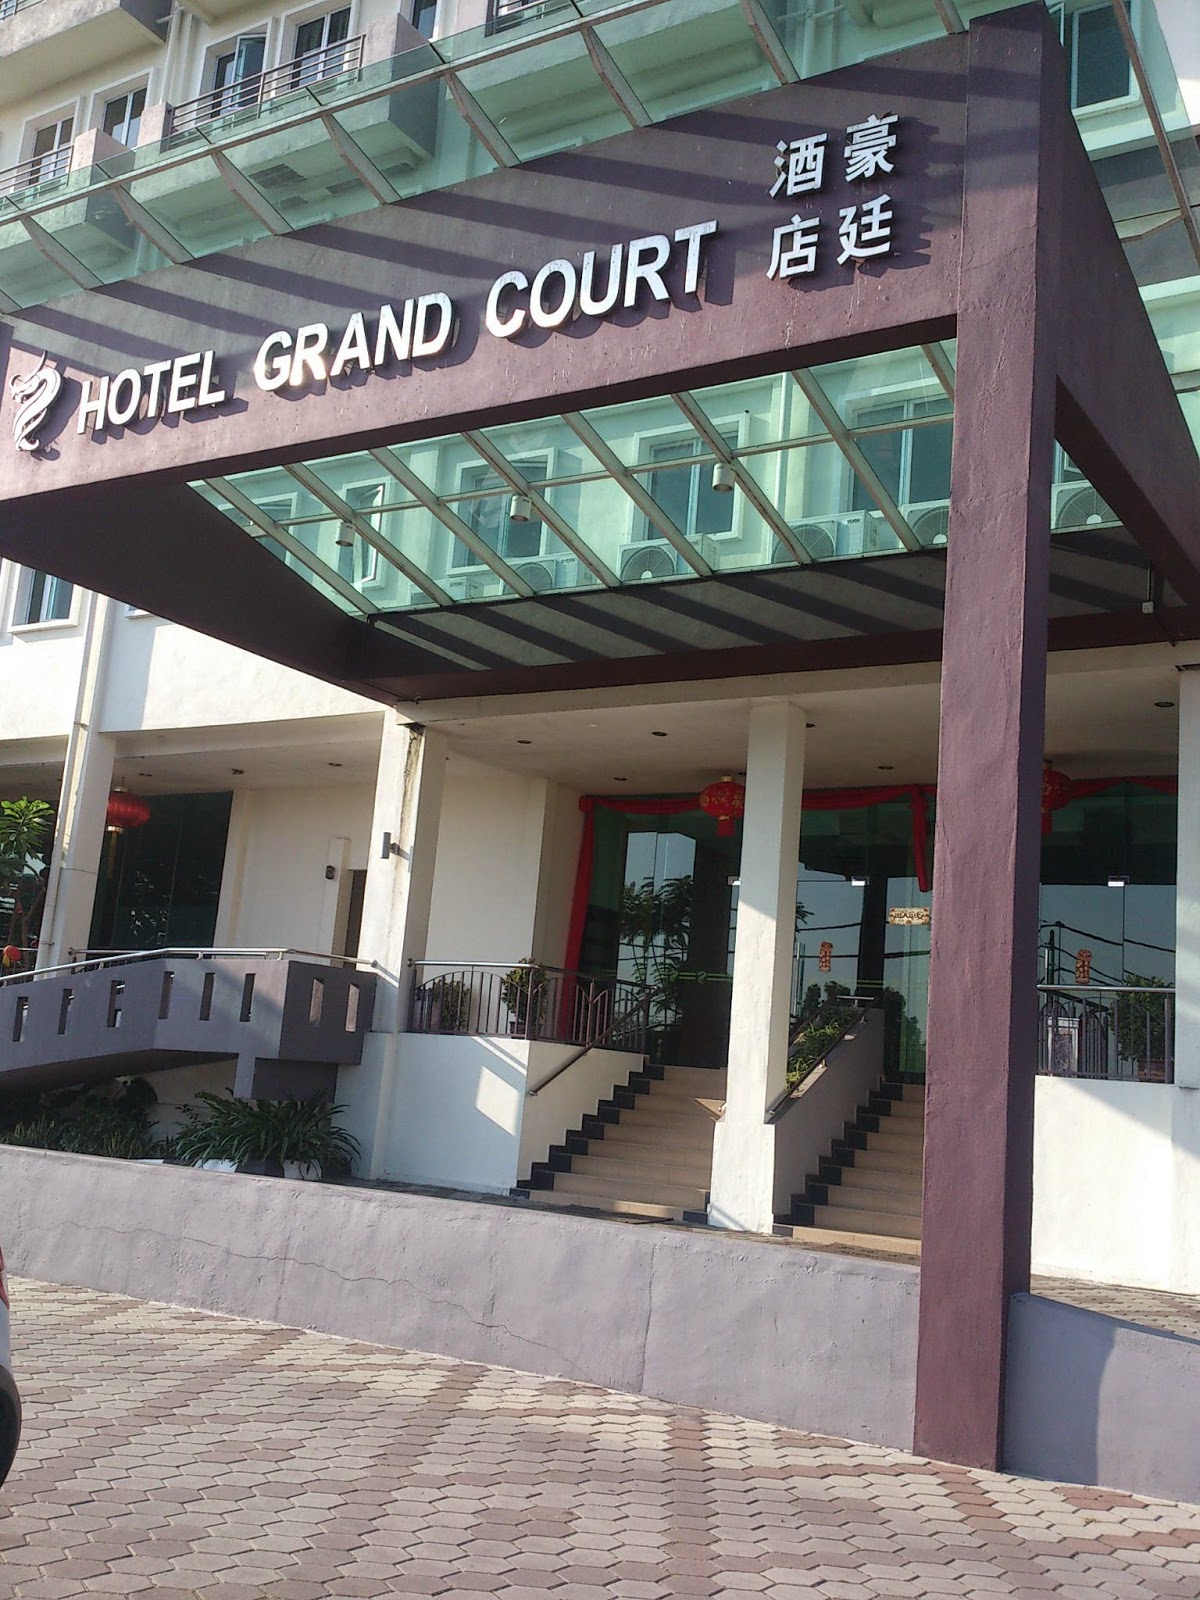 My Life & My Loves ::.: Hotel Grand Court @ Teluk Intan, Perak